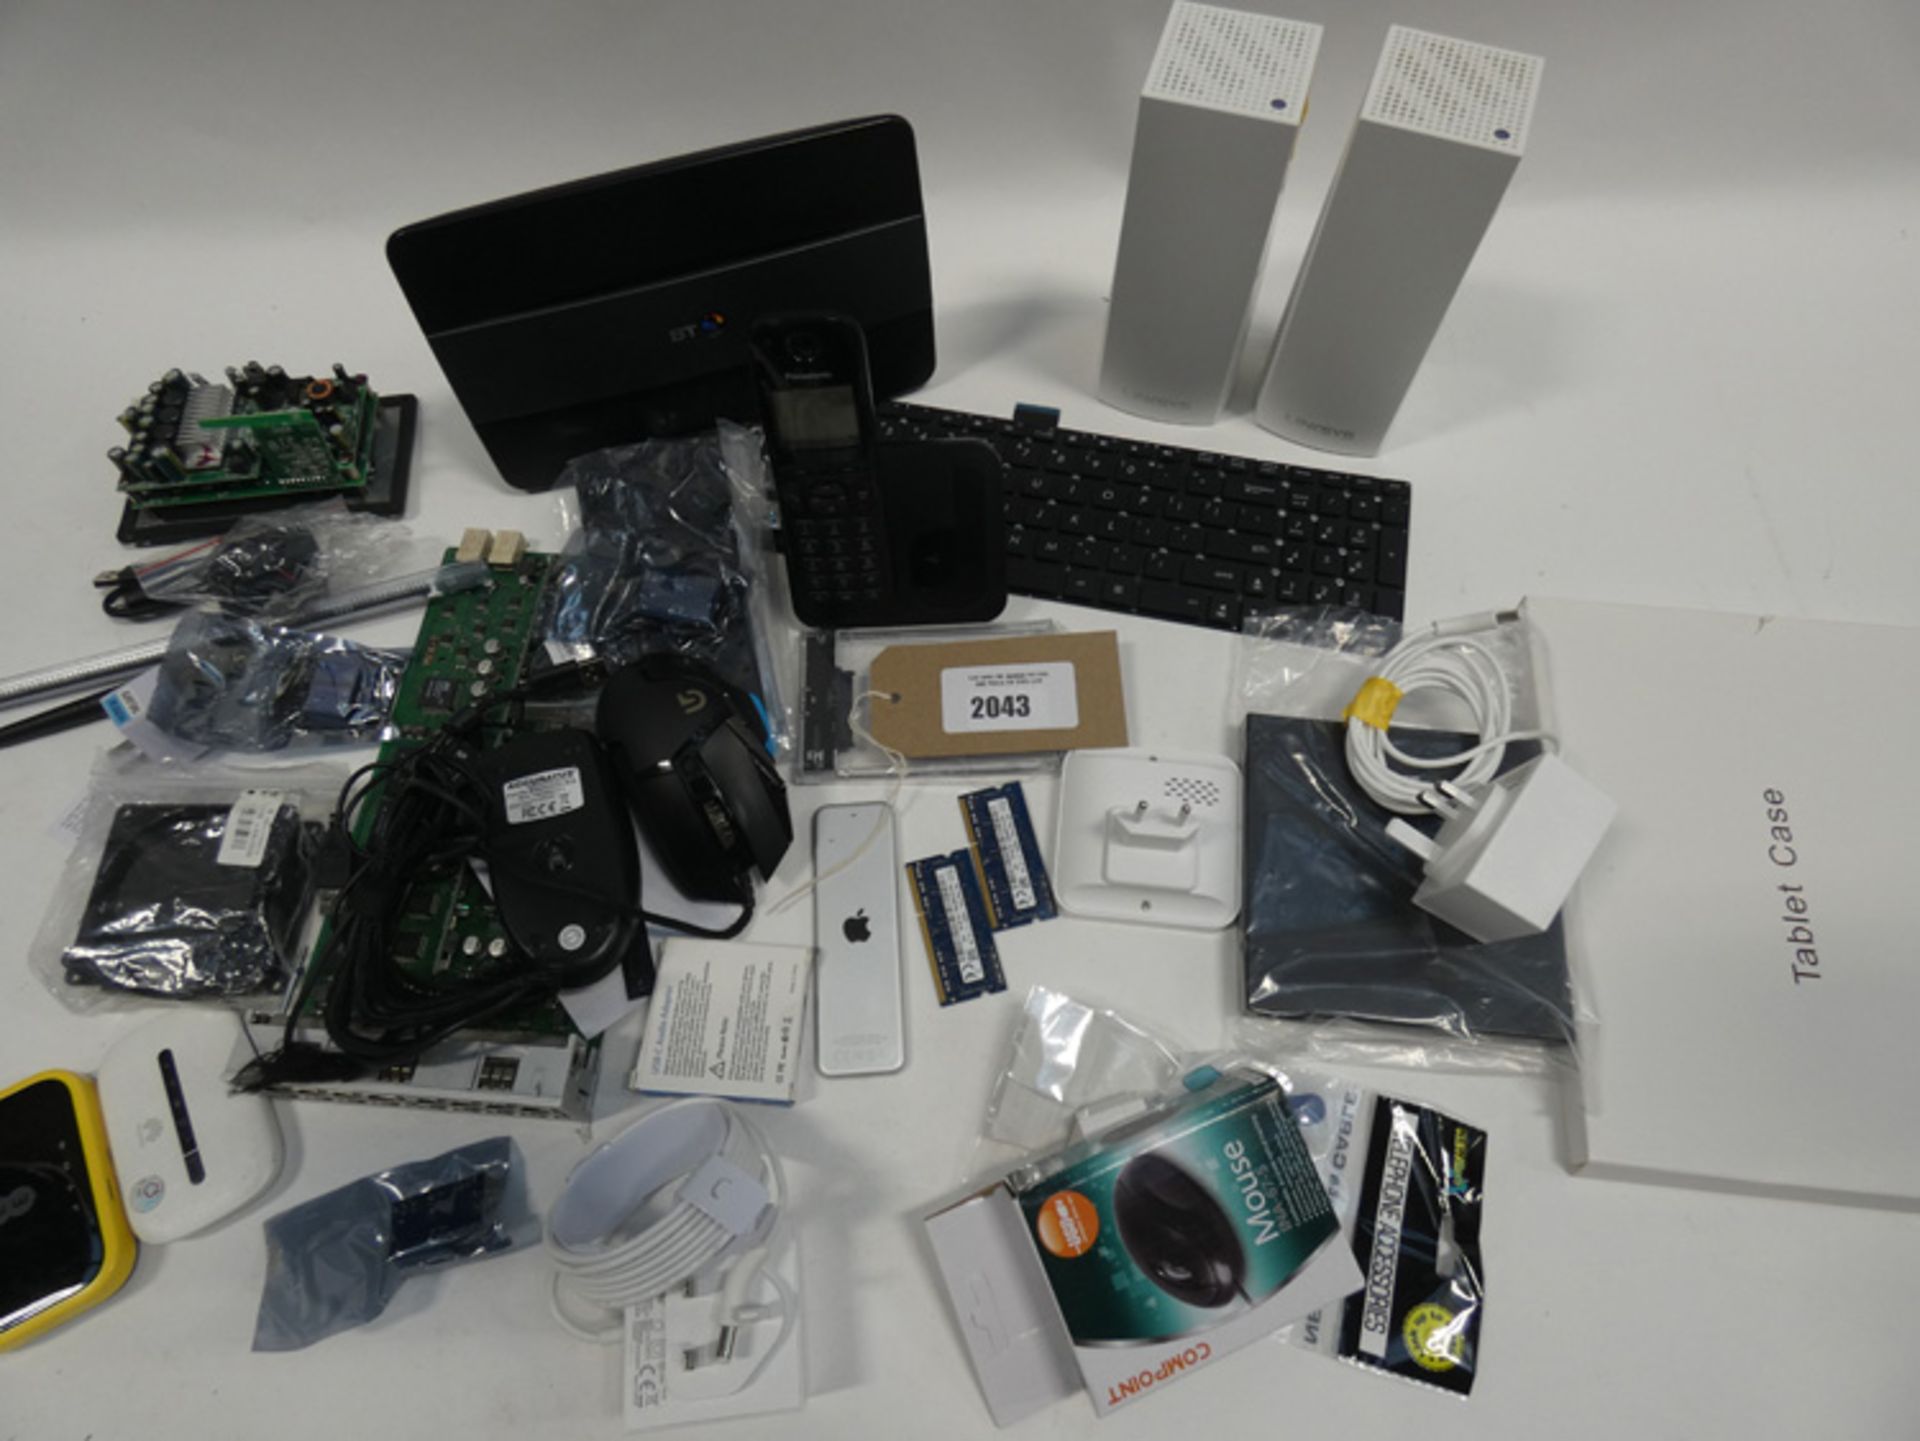 Bag containing network adaptors, Logitech G502 mouse, Apple TV remote A1926, etc.